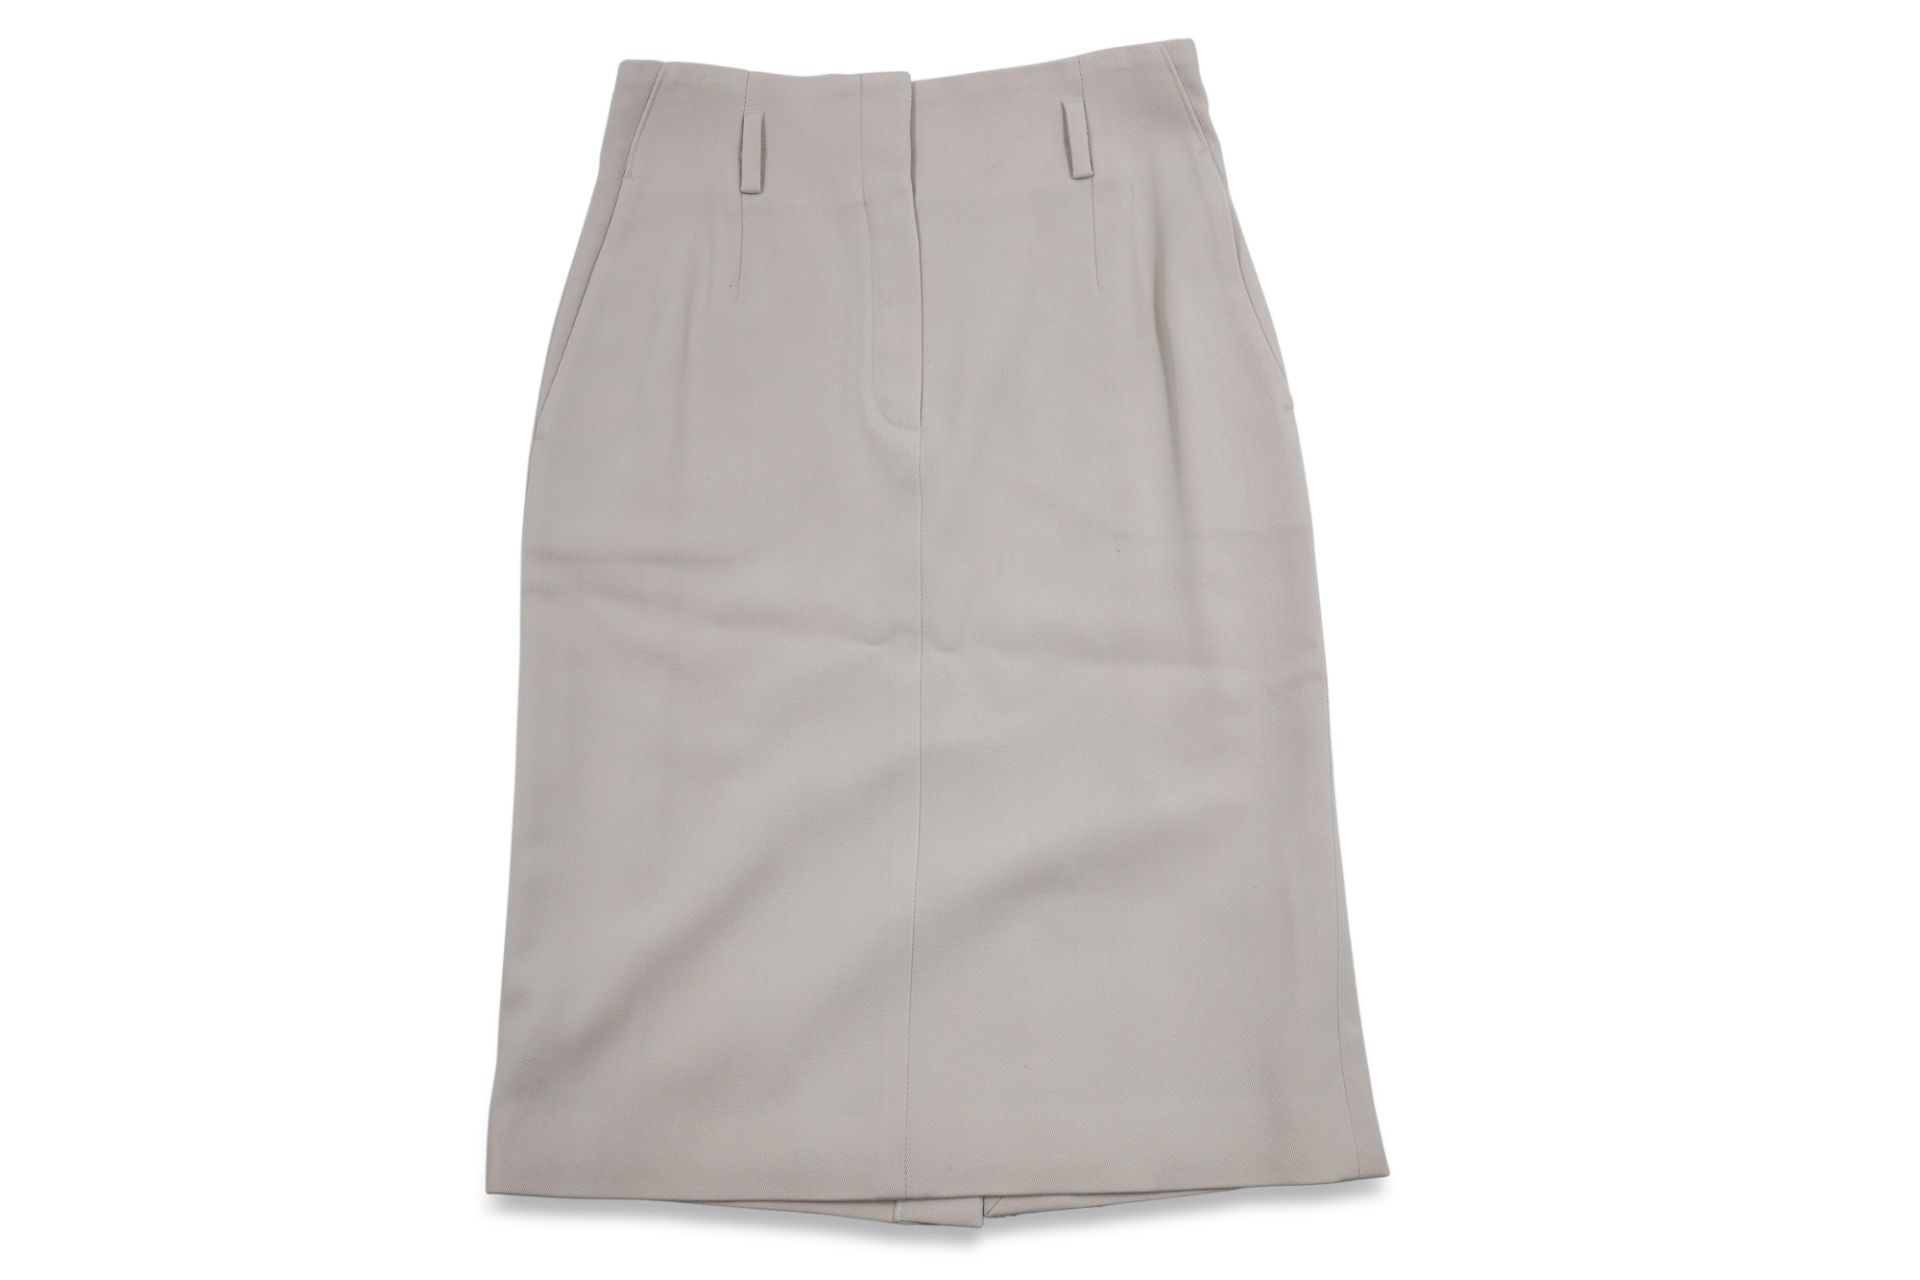 AN HÉRMES SKIRT, 100% cream wool pencil skirt, 100% silk lining, size 40 *** slightly marked